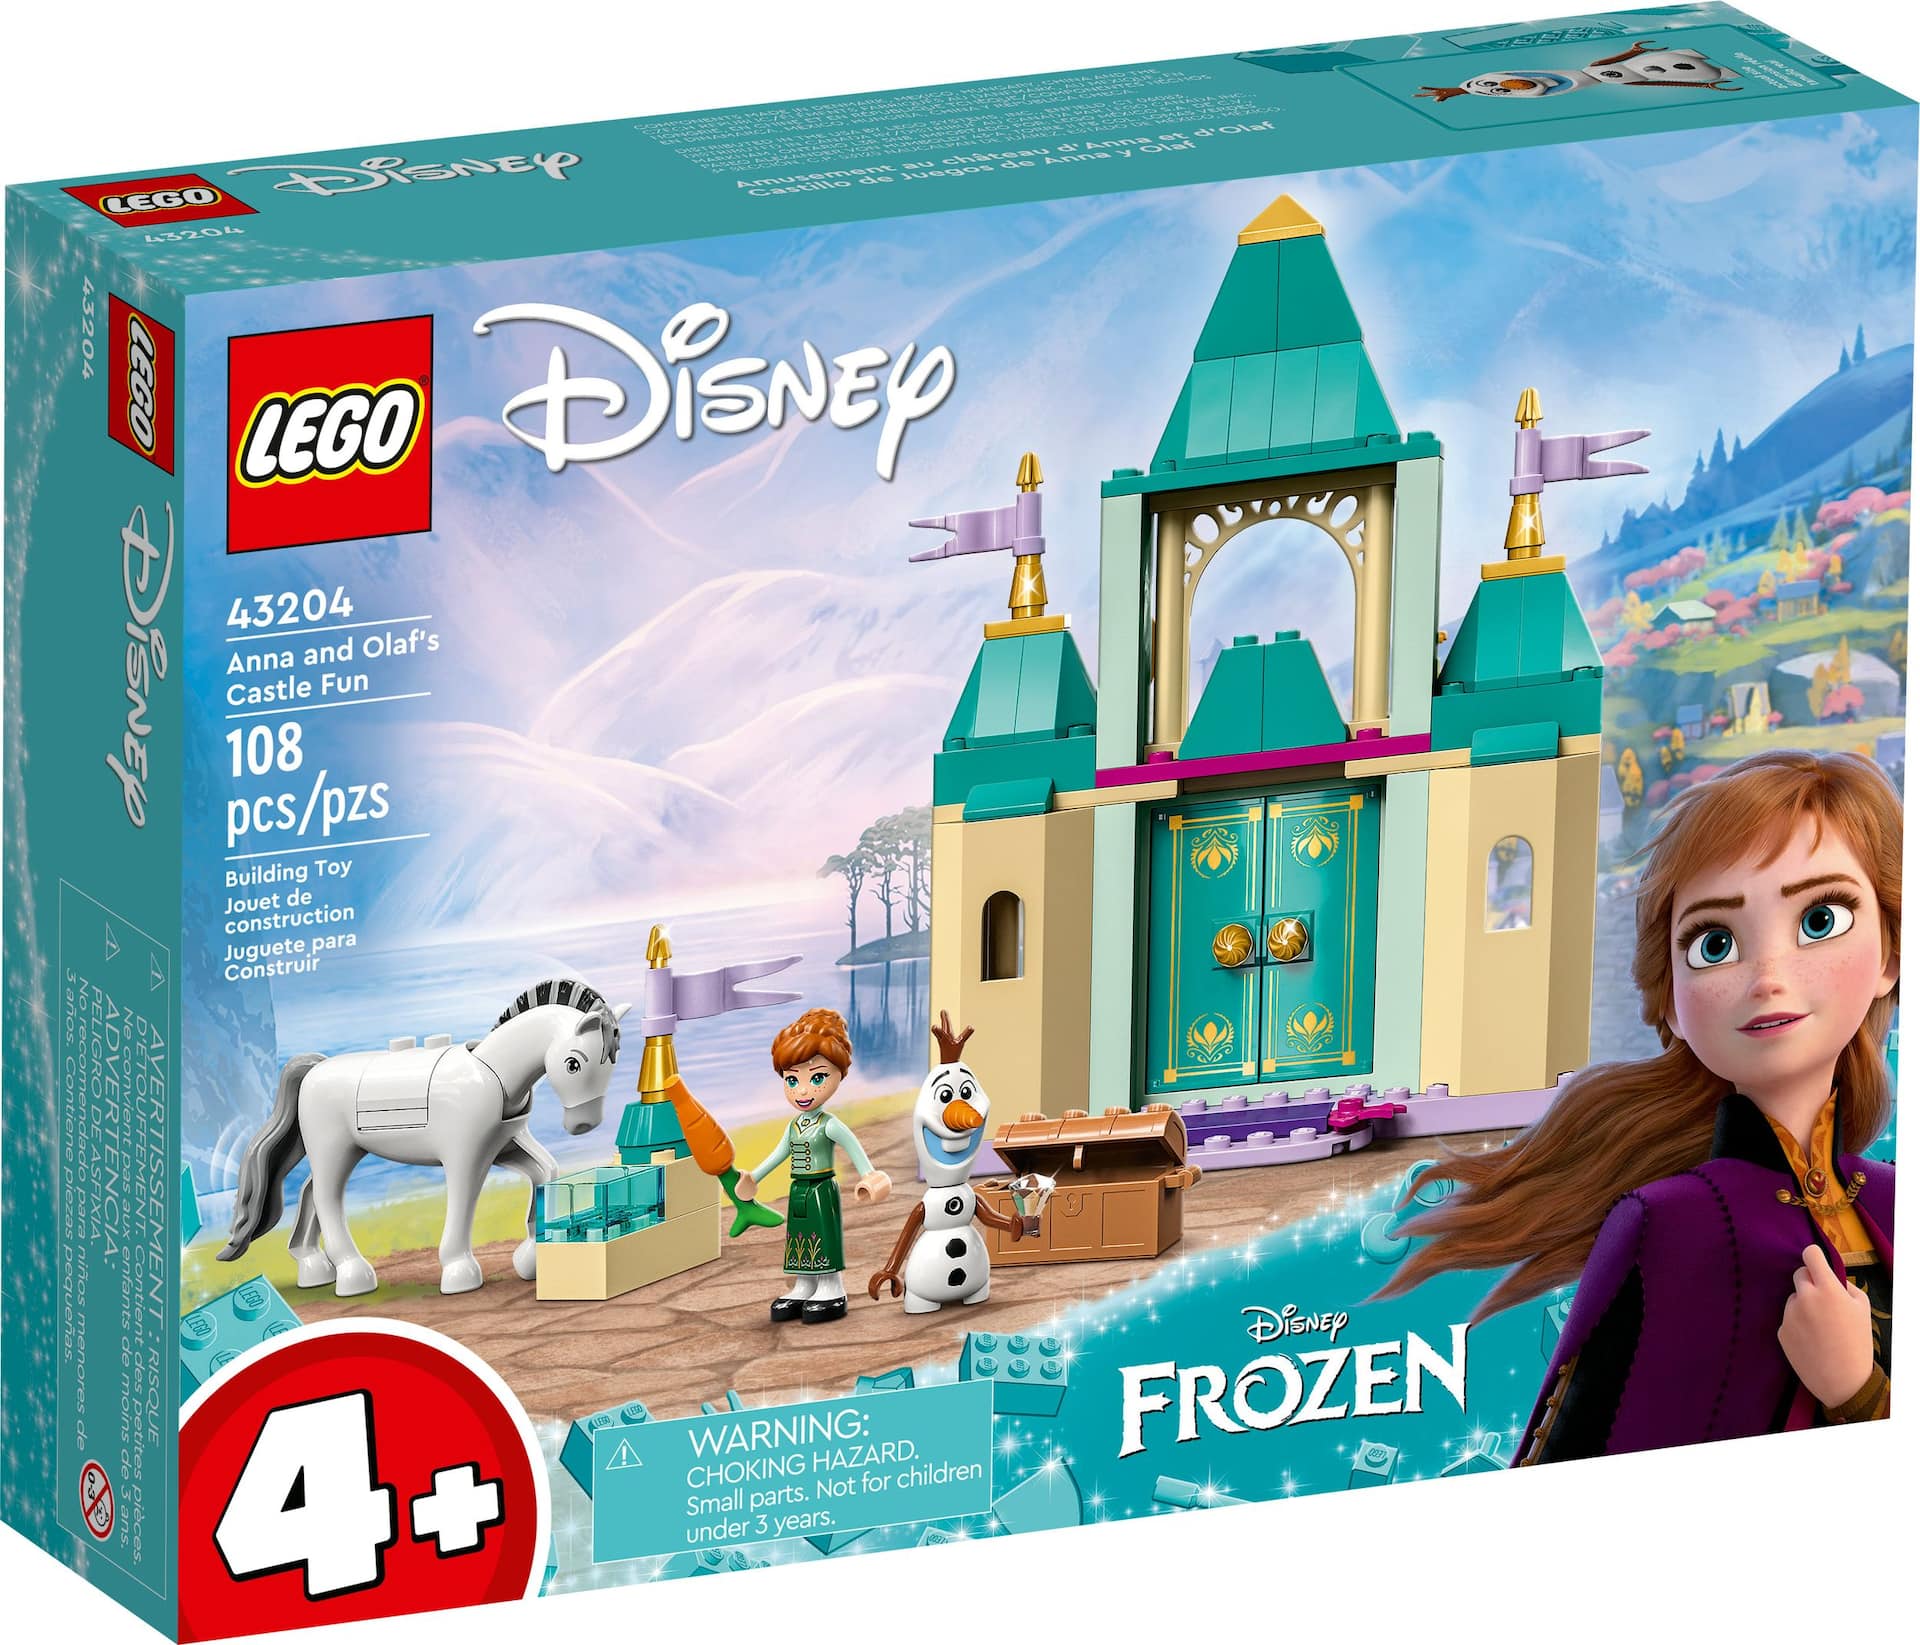 LEGO® 43204 Disney Anna and Olaf’s Castle Fun Set, Ages 4+, 108-pc